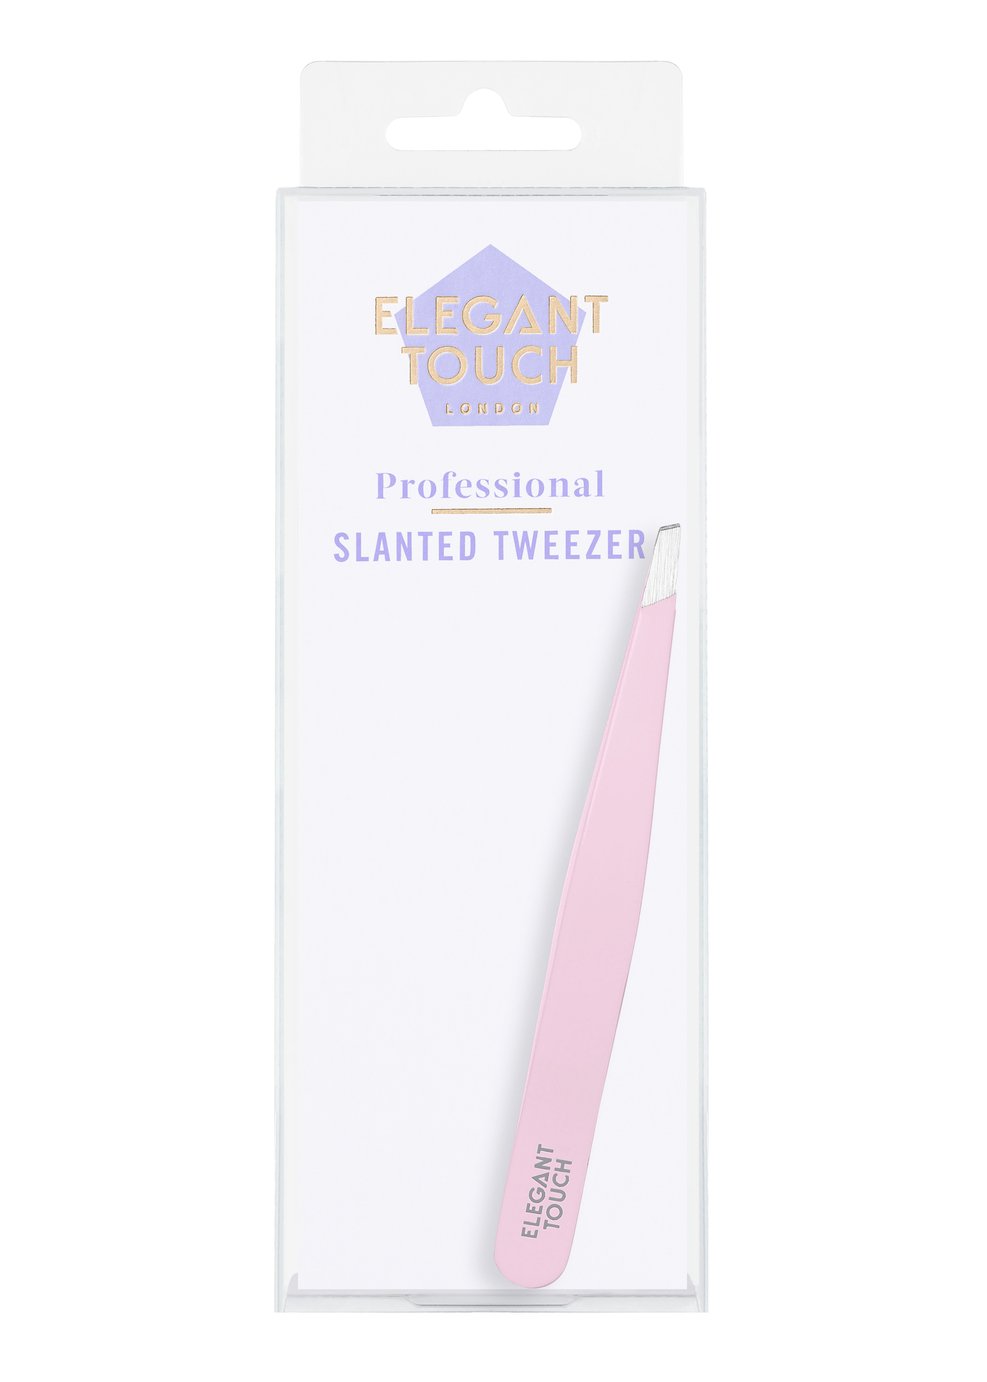 Elegant Touch Professional Slanted Tweezers